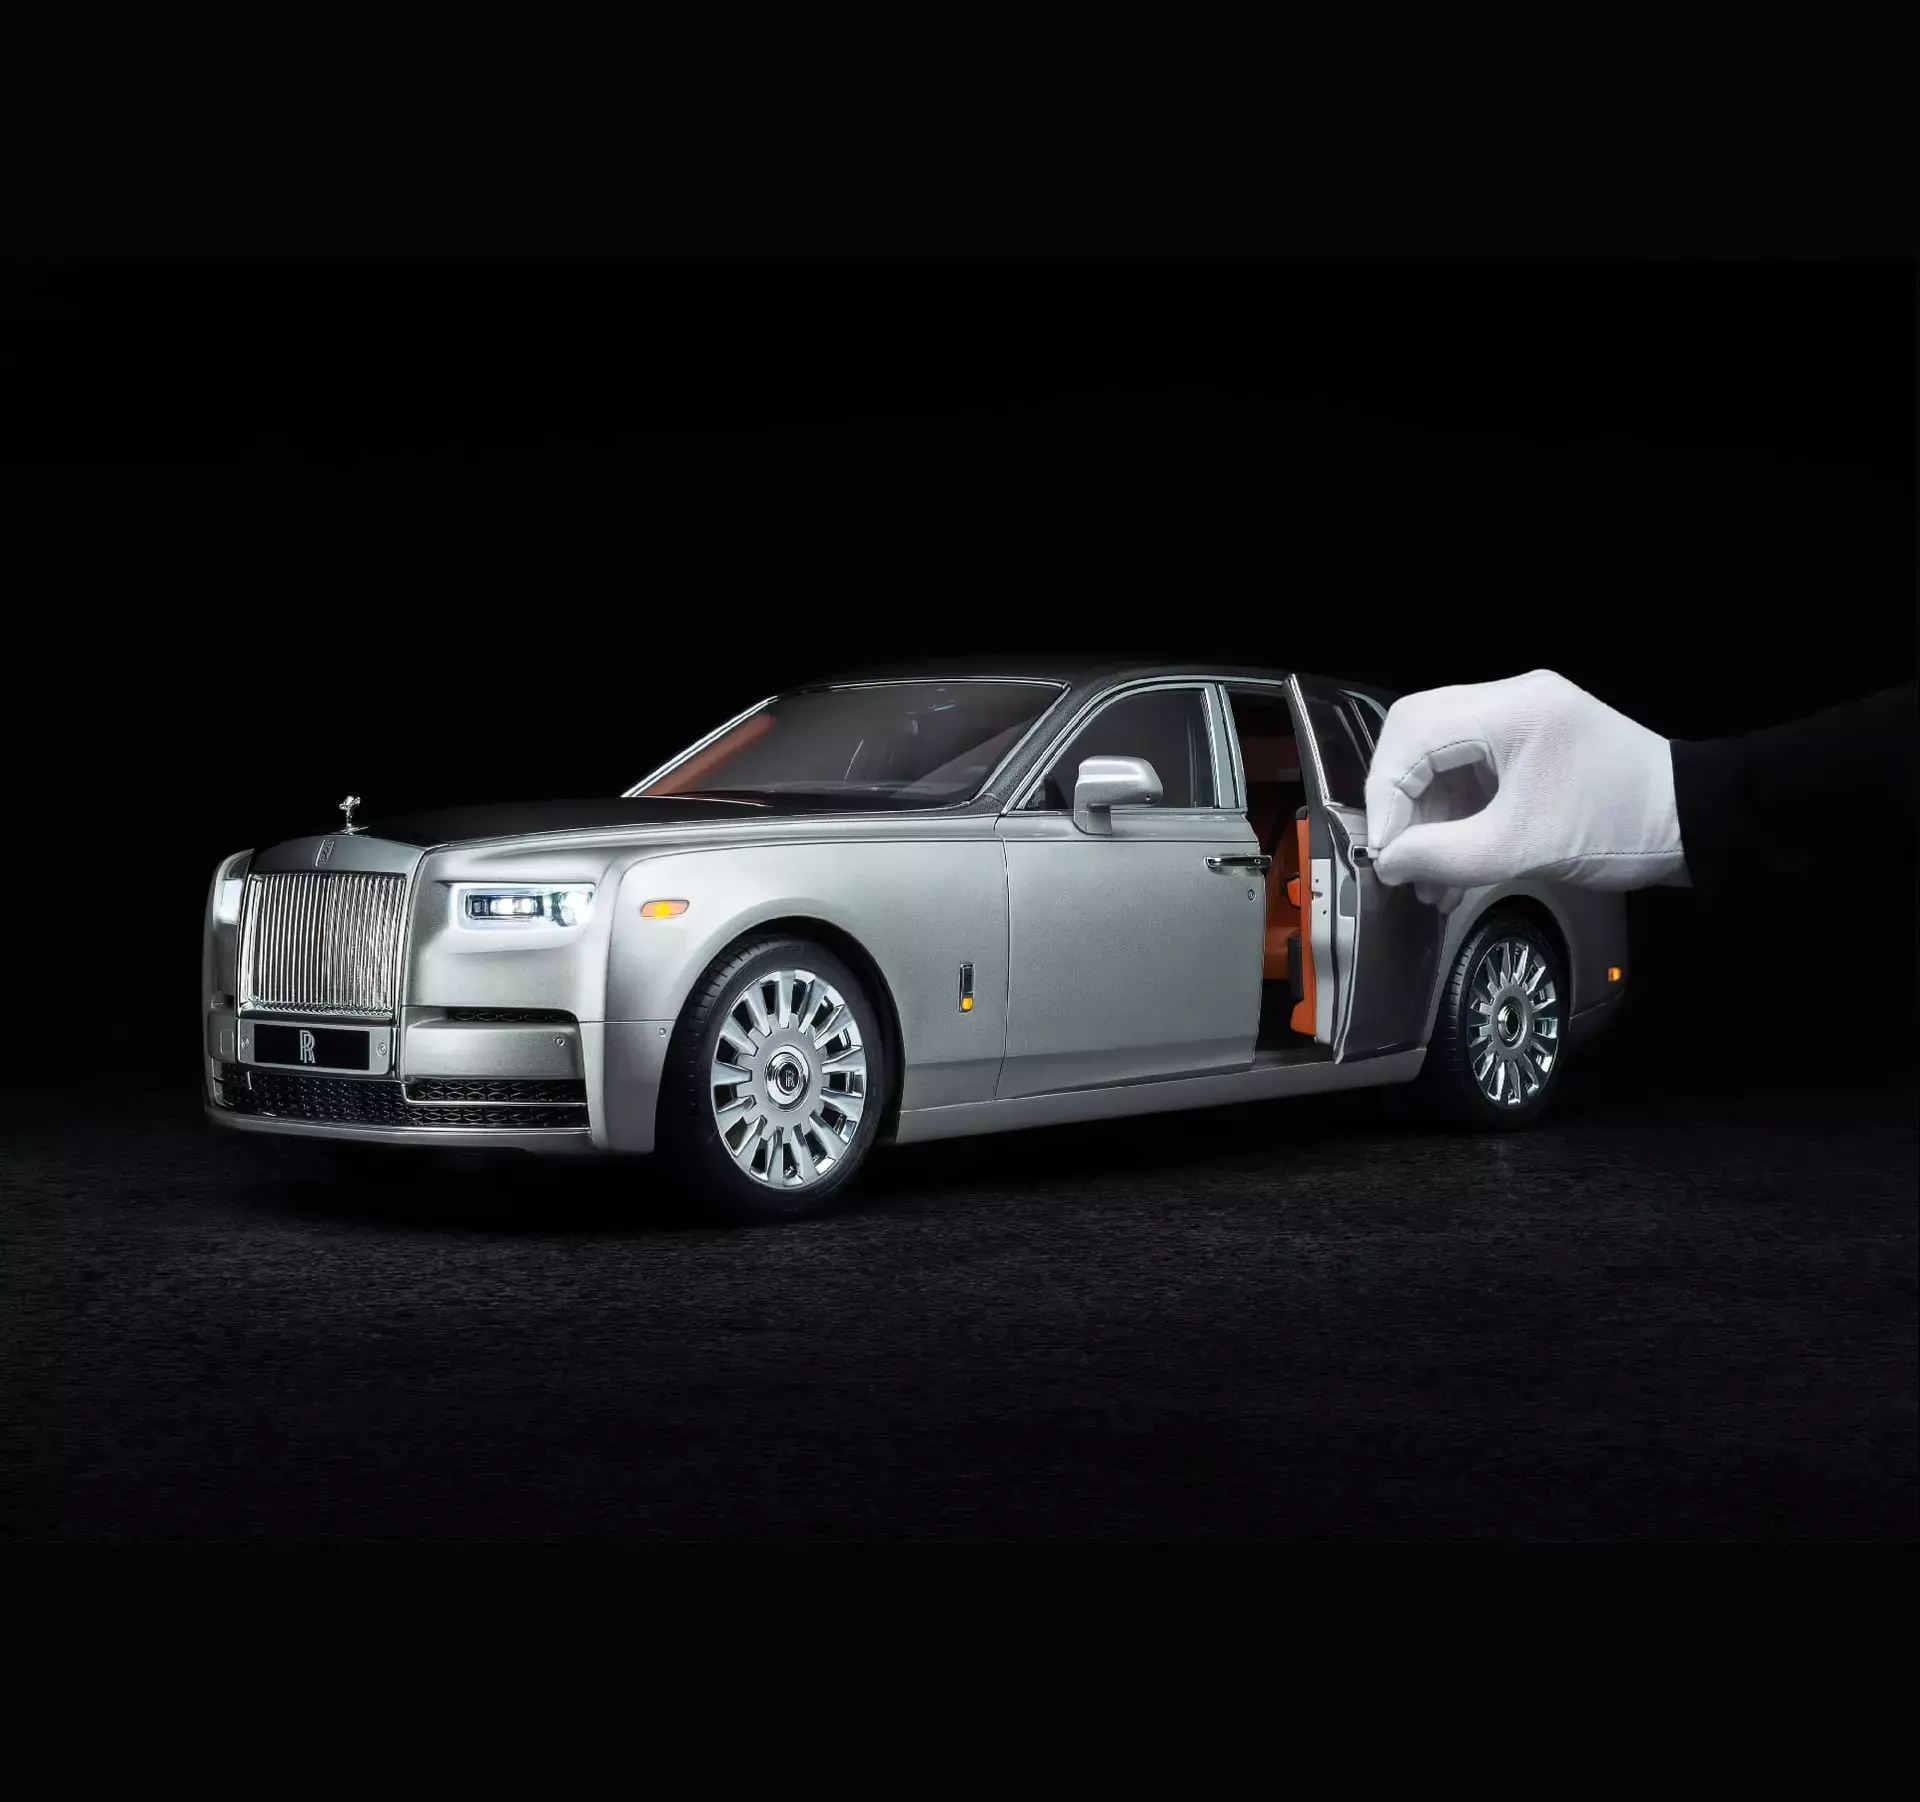 A replica model Rolls-Royce Phantom